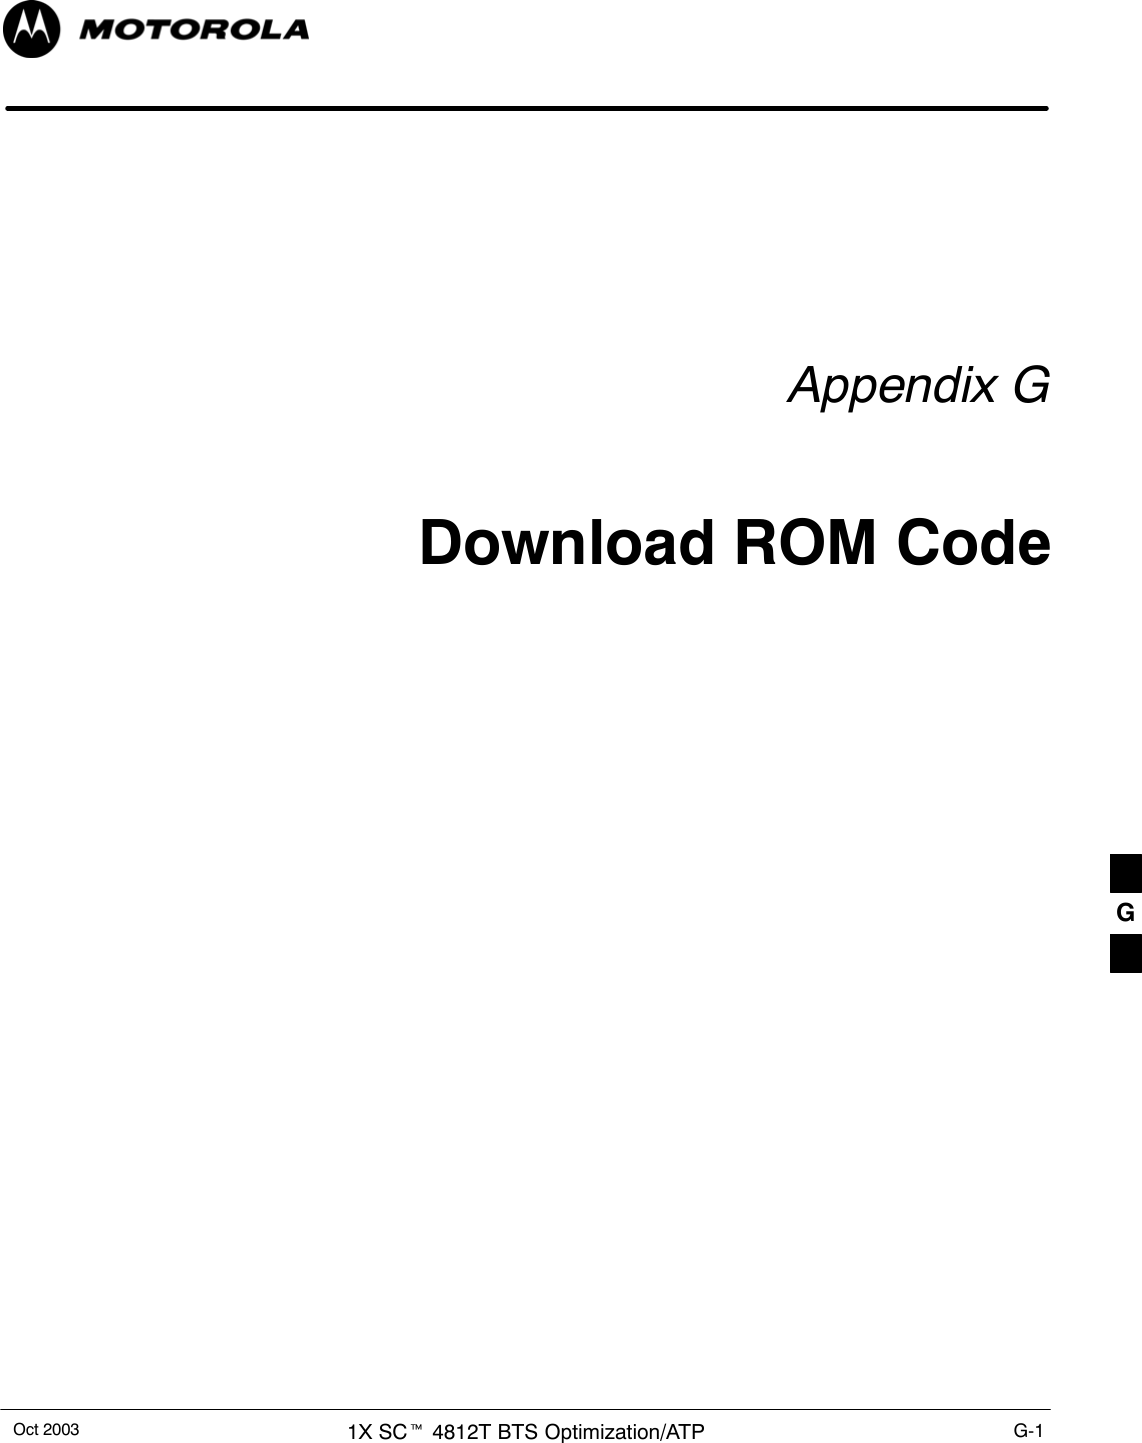 Oct 2003 1X SCt 4812T BTS Optimization/ATP G-1Appendix GDownload ROM CodeG